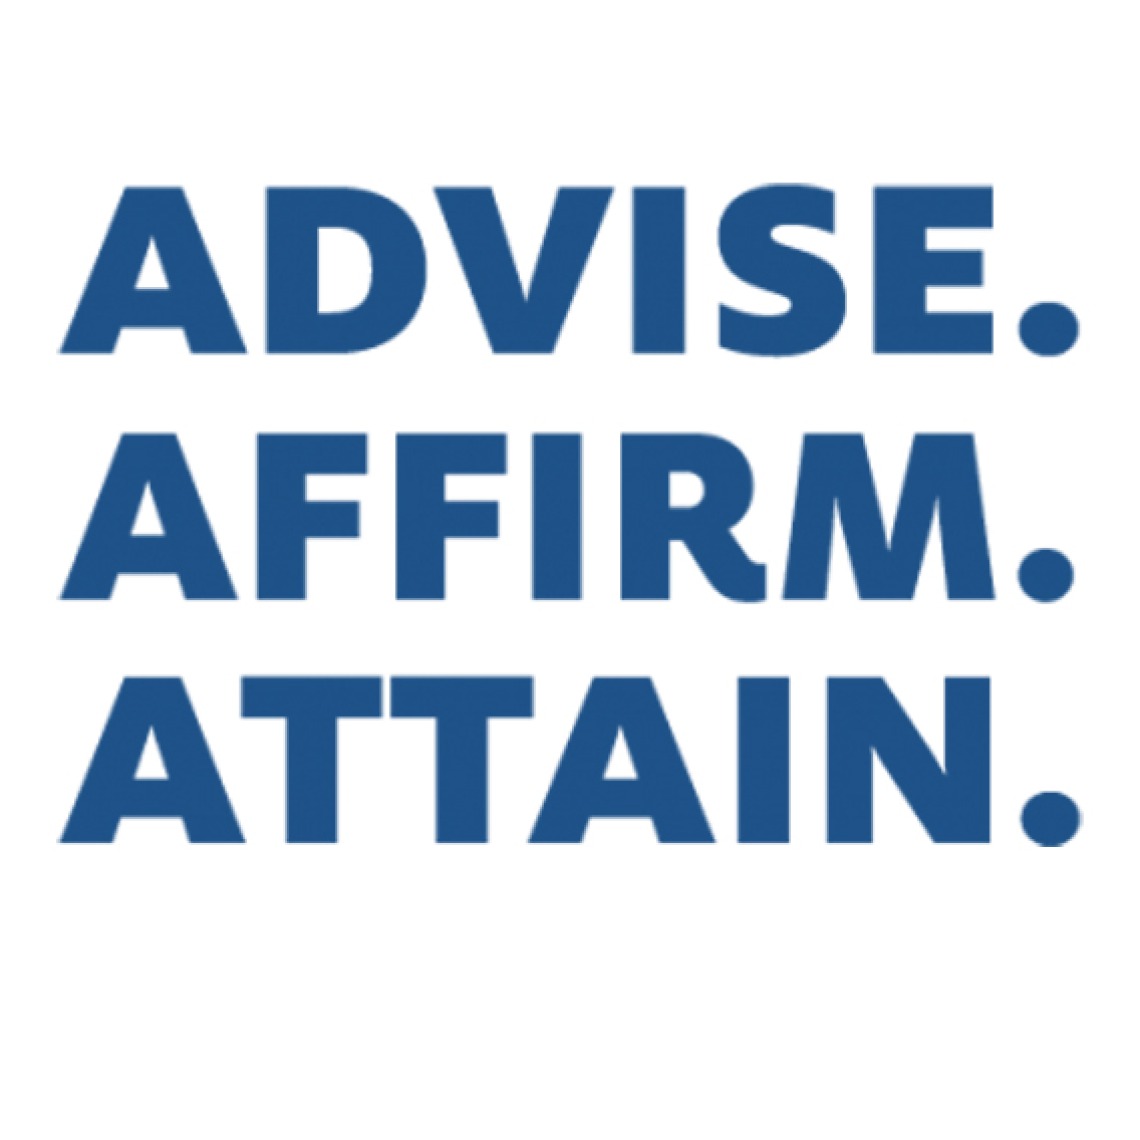 Advise.Affirm.Attain poster